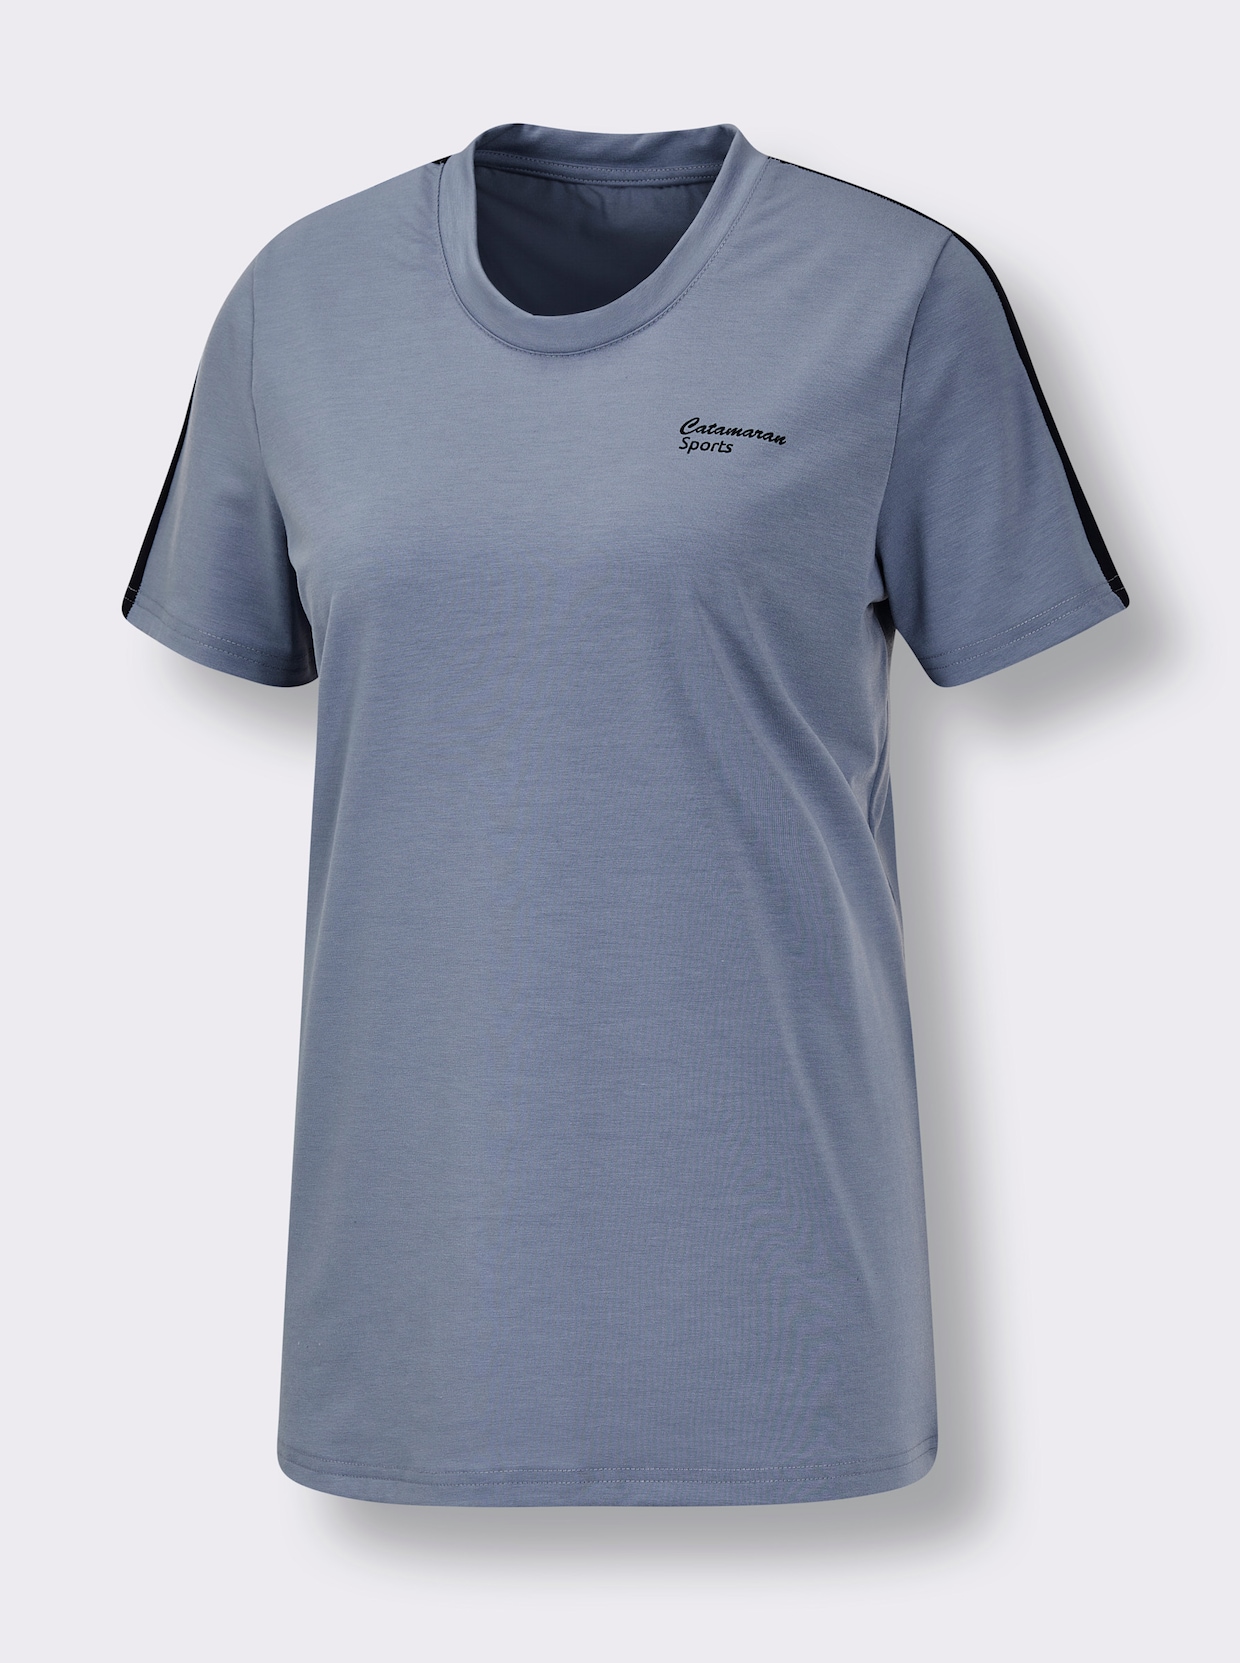 Catamaran Sports Funktions-Shirt - taubenblau-schwarz